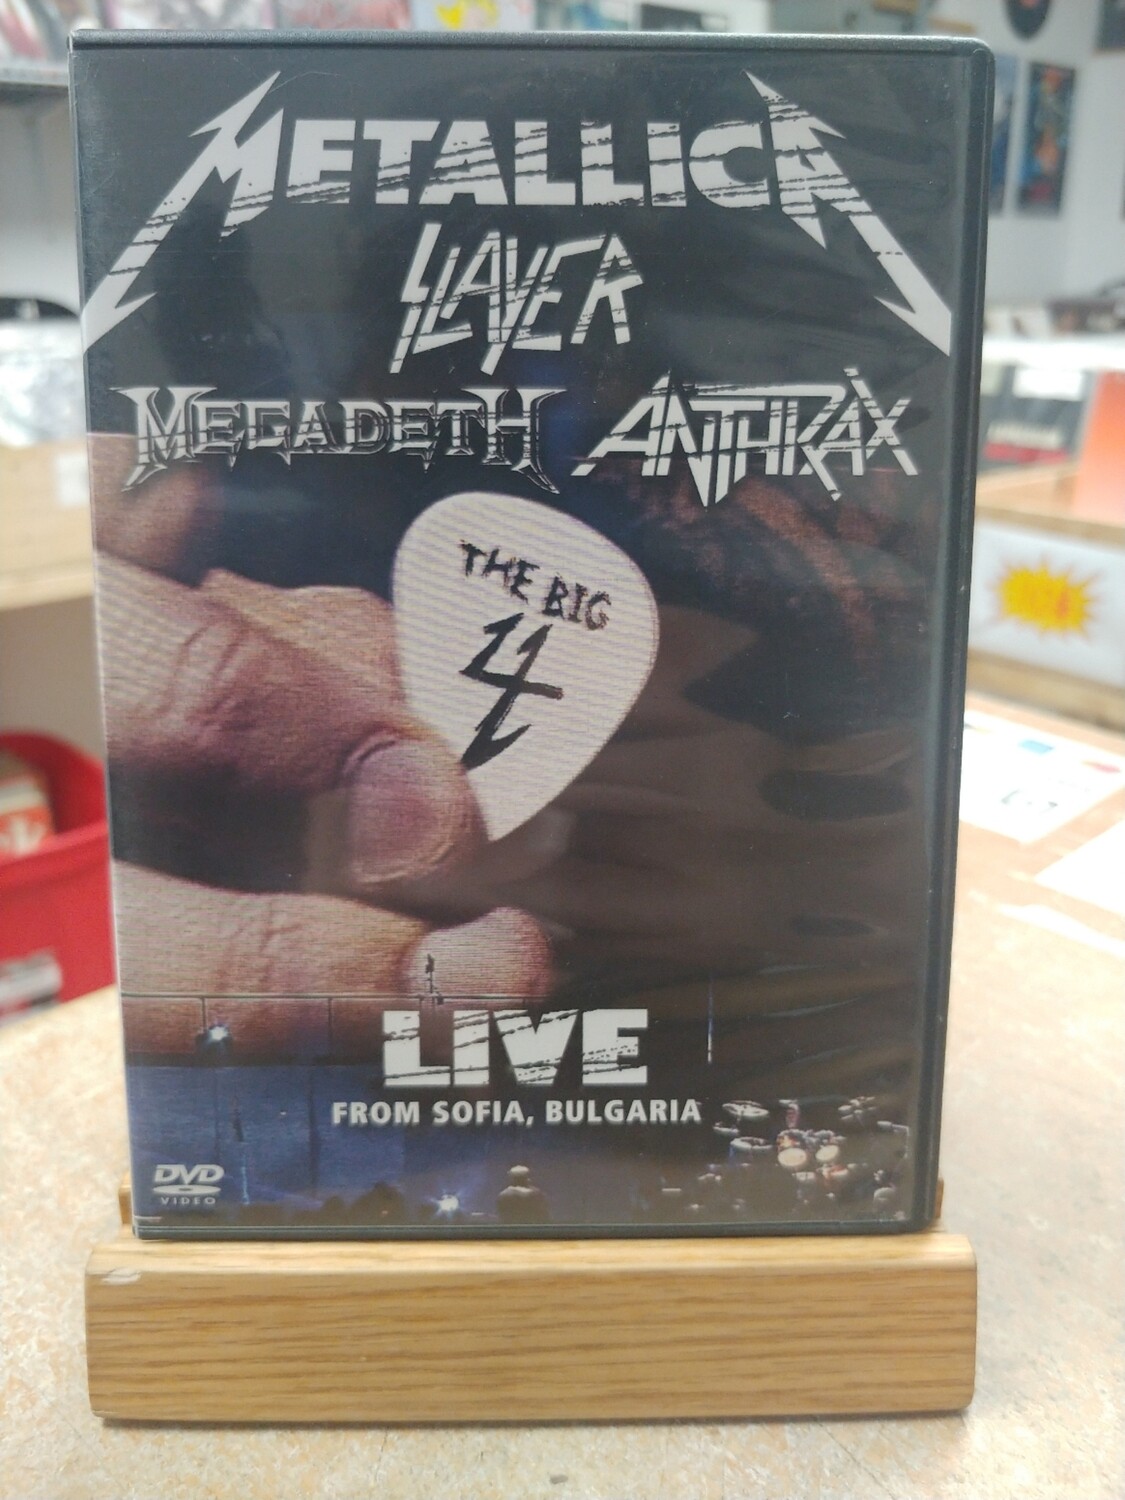 Metallica / Slayer / Megadeth / Anthrax - The Big 4 Live from Sofia, Bulgaria (DVD)